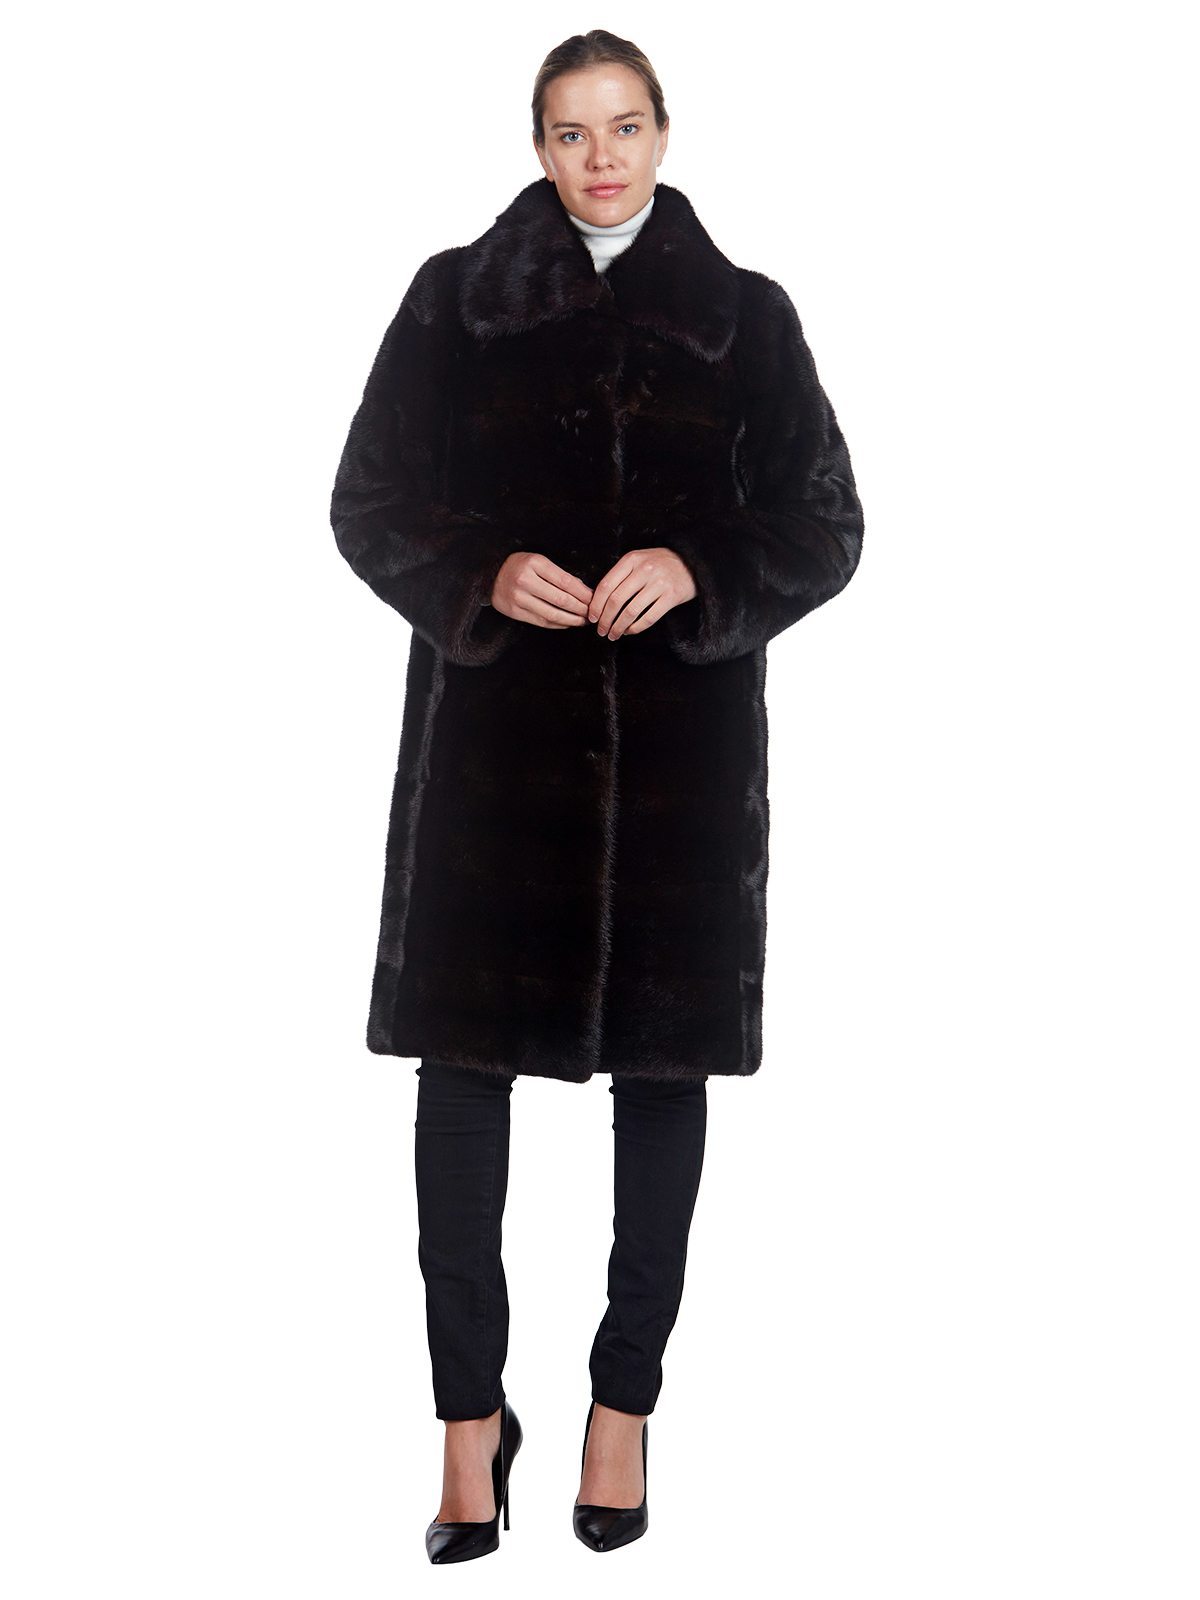 Fendi Ranch Mink Fur Coat - Women's Fur Coat - Large | Estate Furs